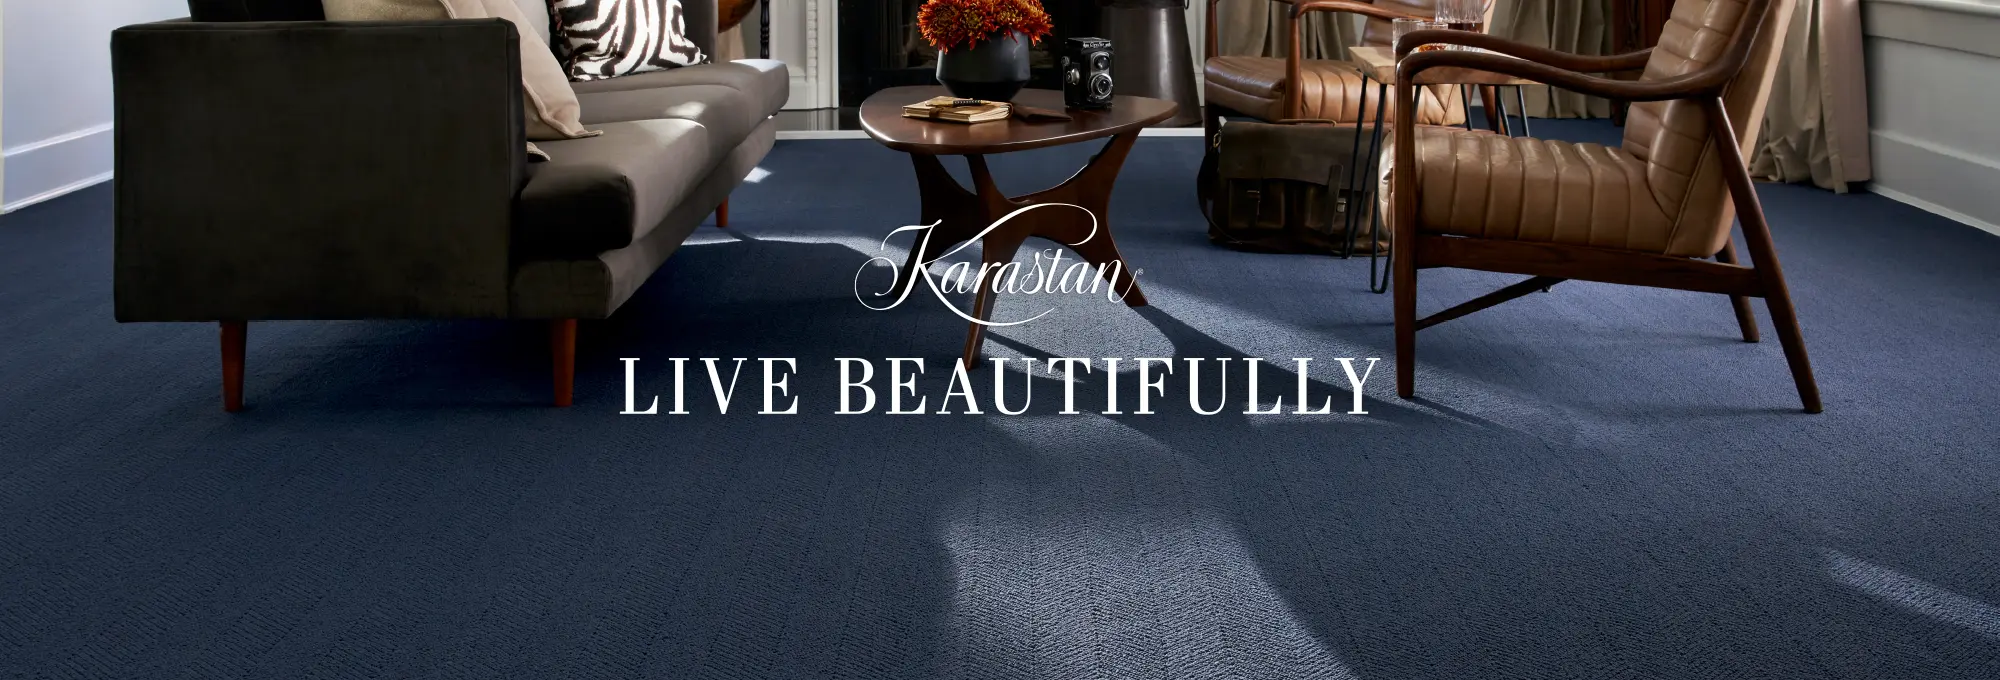 Karastan flooring products from Carpet Liquidators